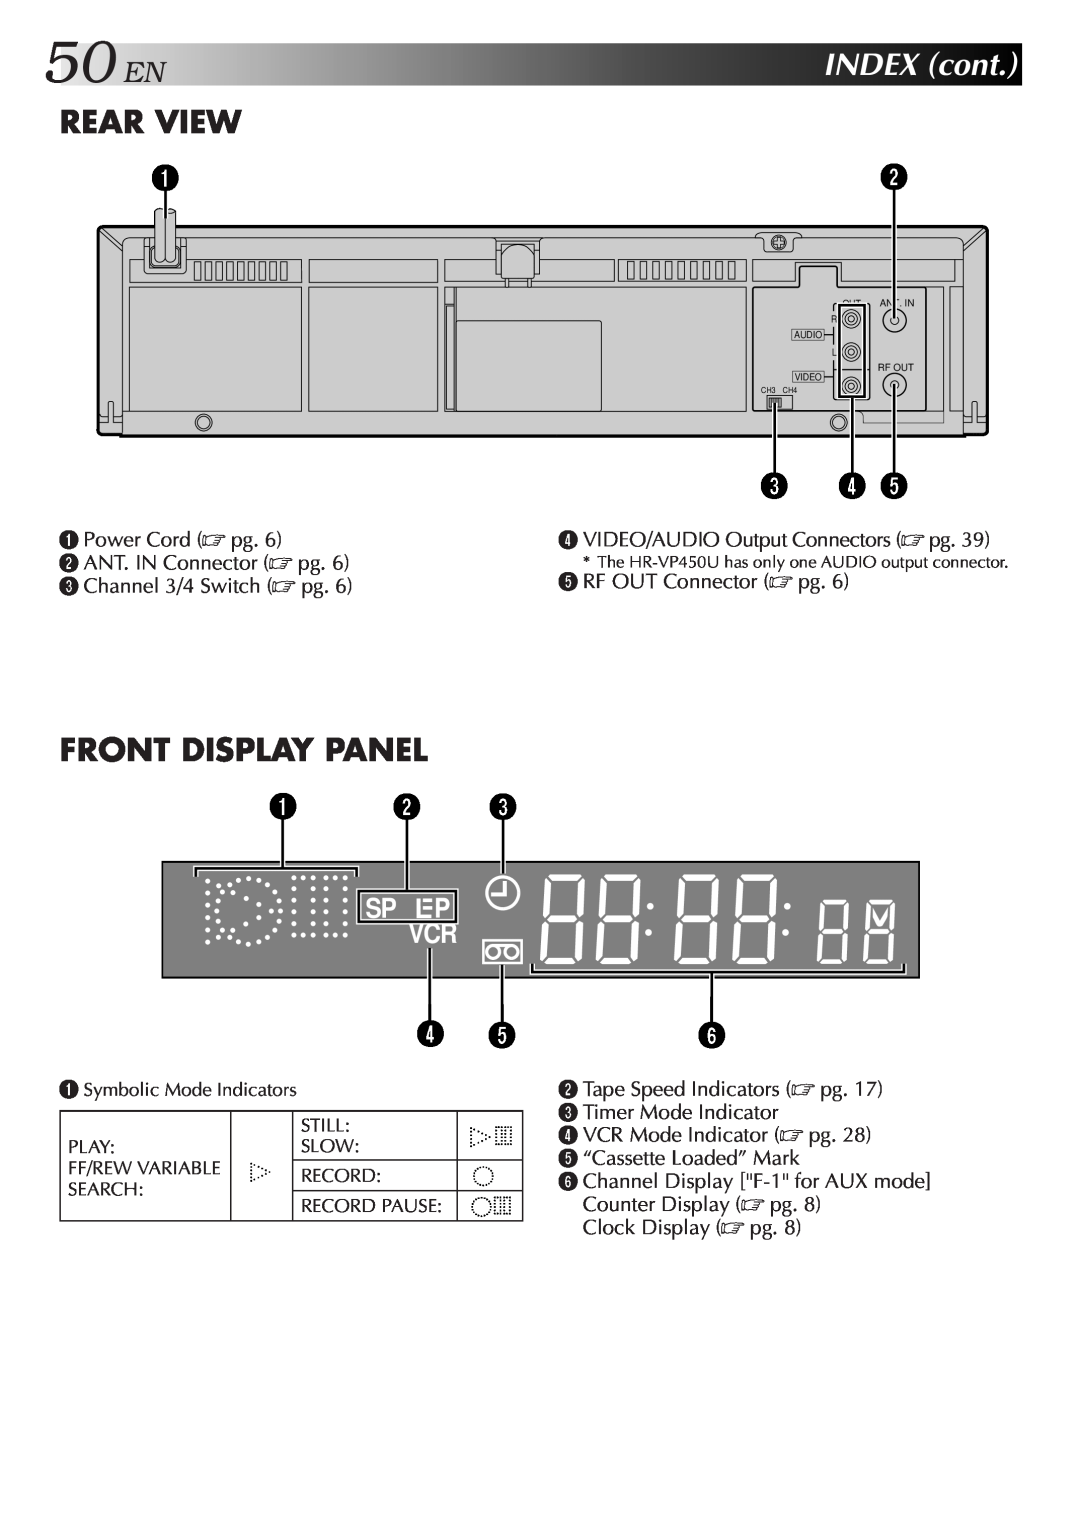 JVC HR-VP650U, HR-VP450U instruction manual 50ENINDEX cont, Rear View, Front Display Panel 